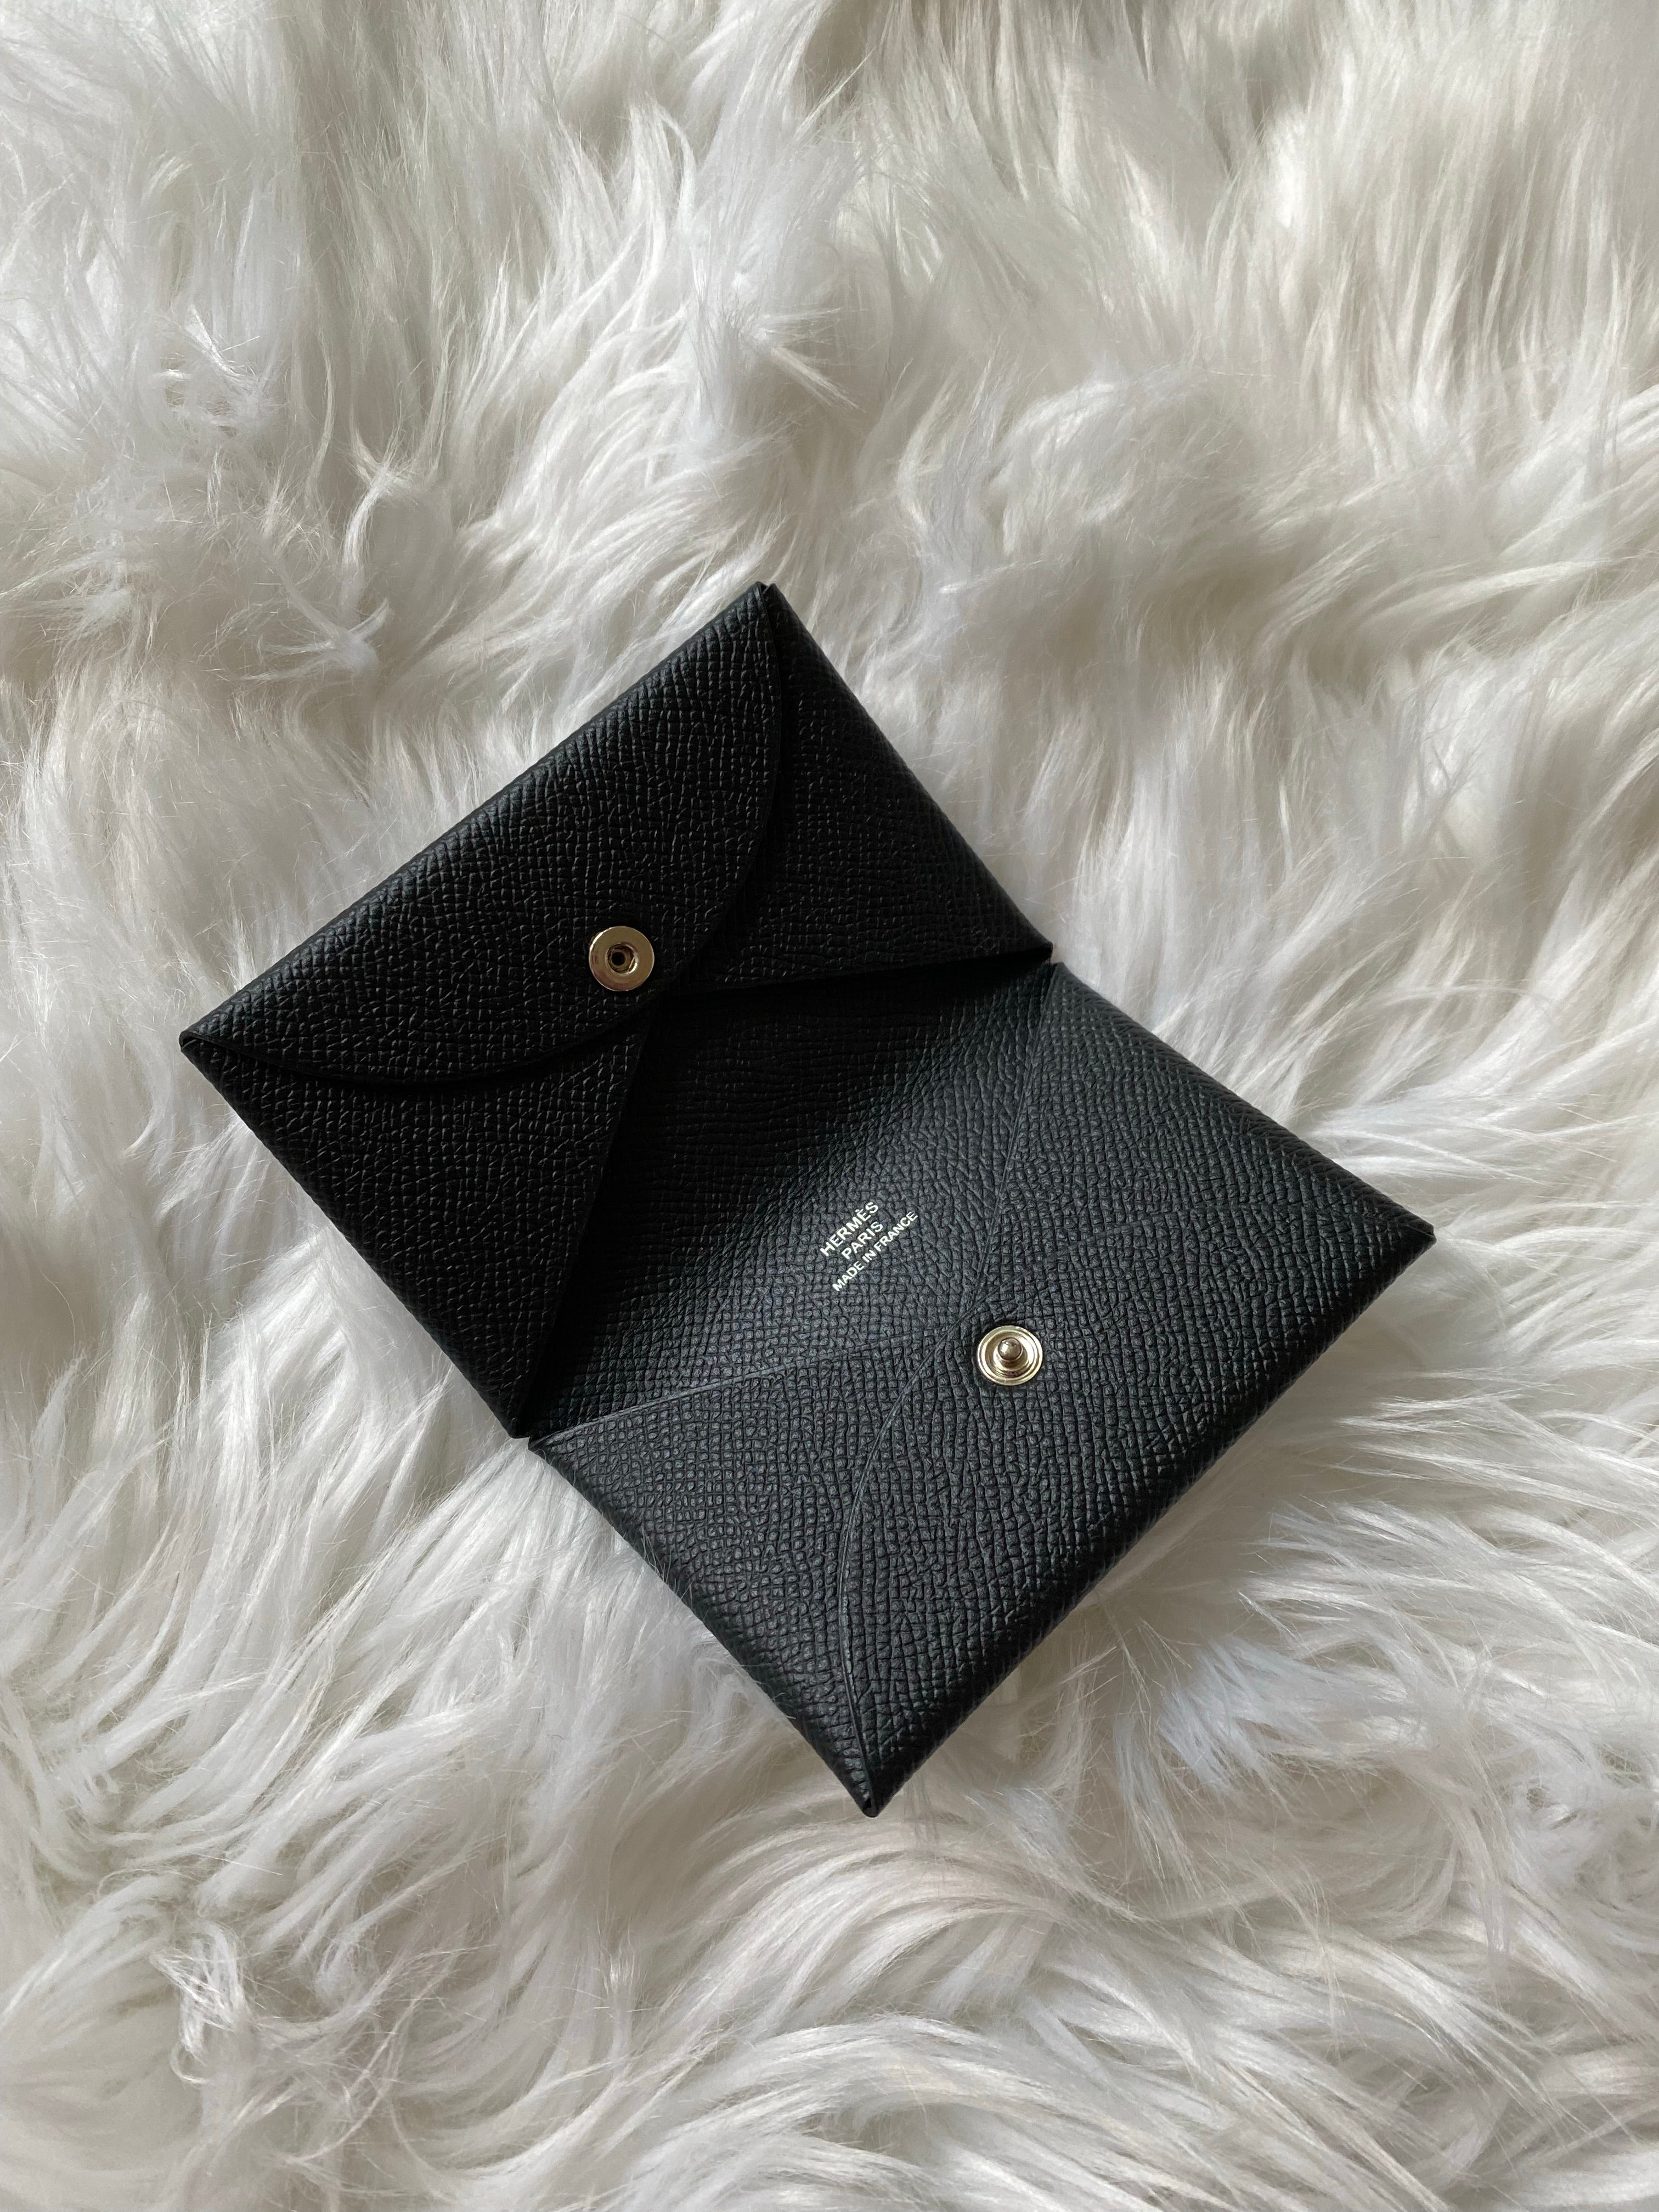 Hermes Calvi Card Holder – Beccas Bags